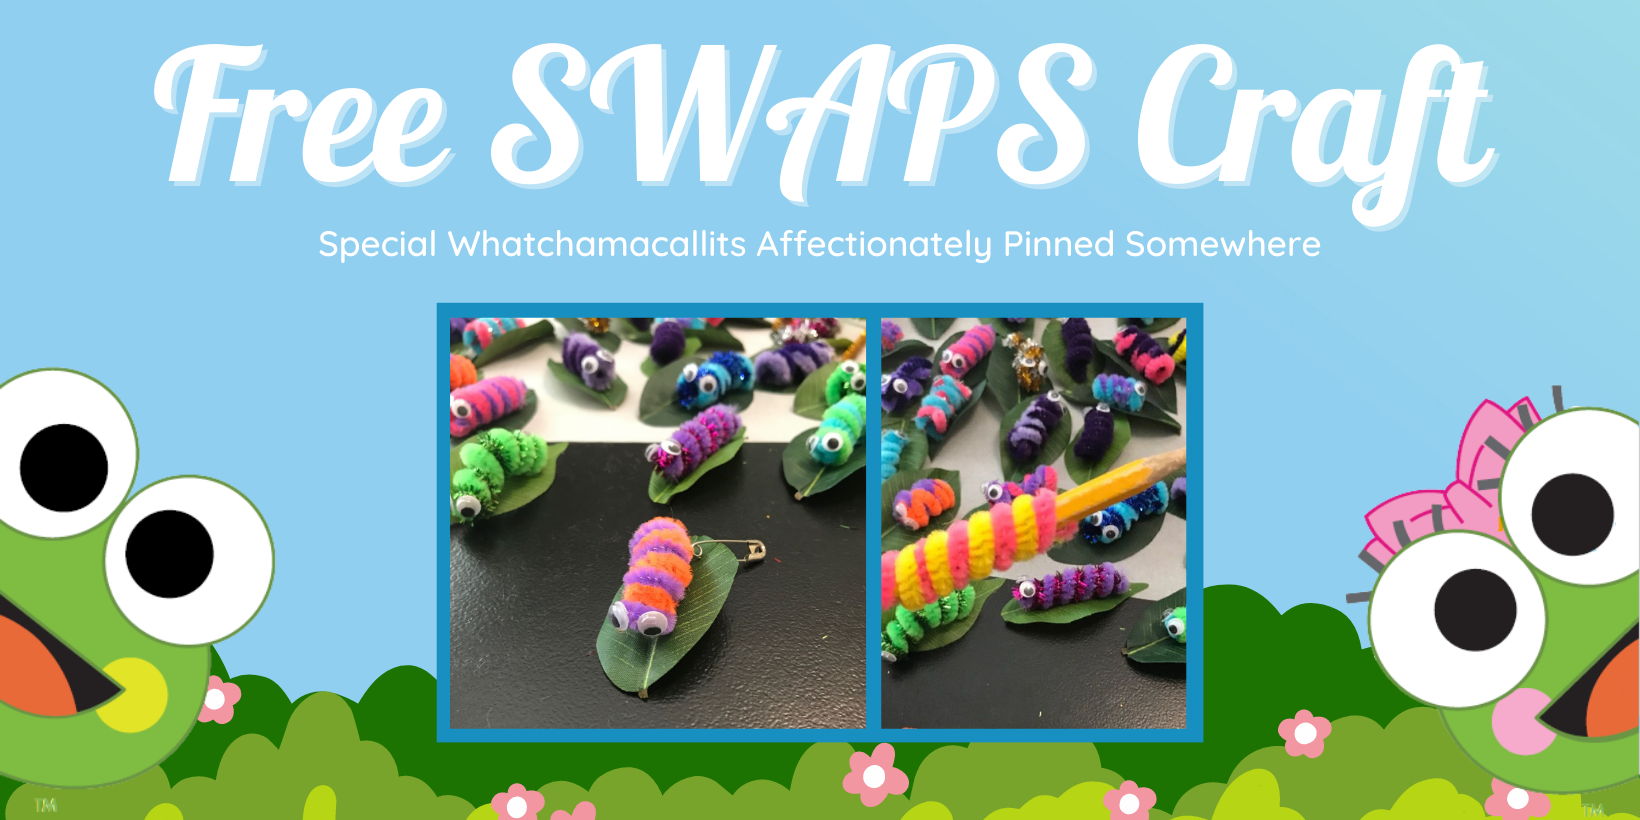 Free SWAPS craft at sweetFrog Timonium promotional image